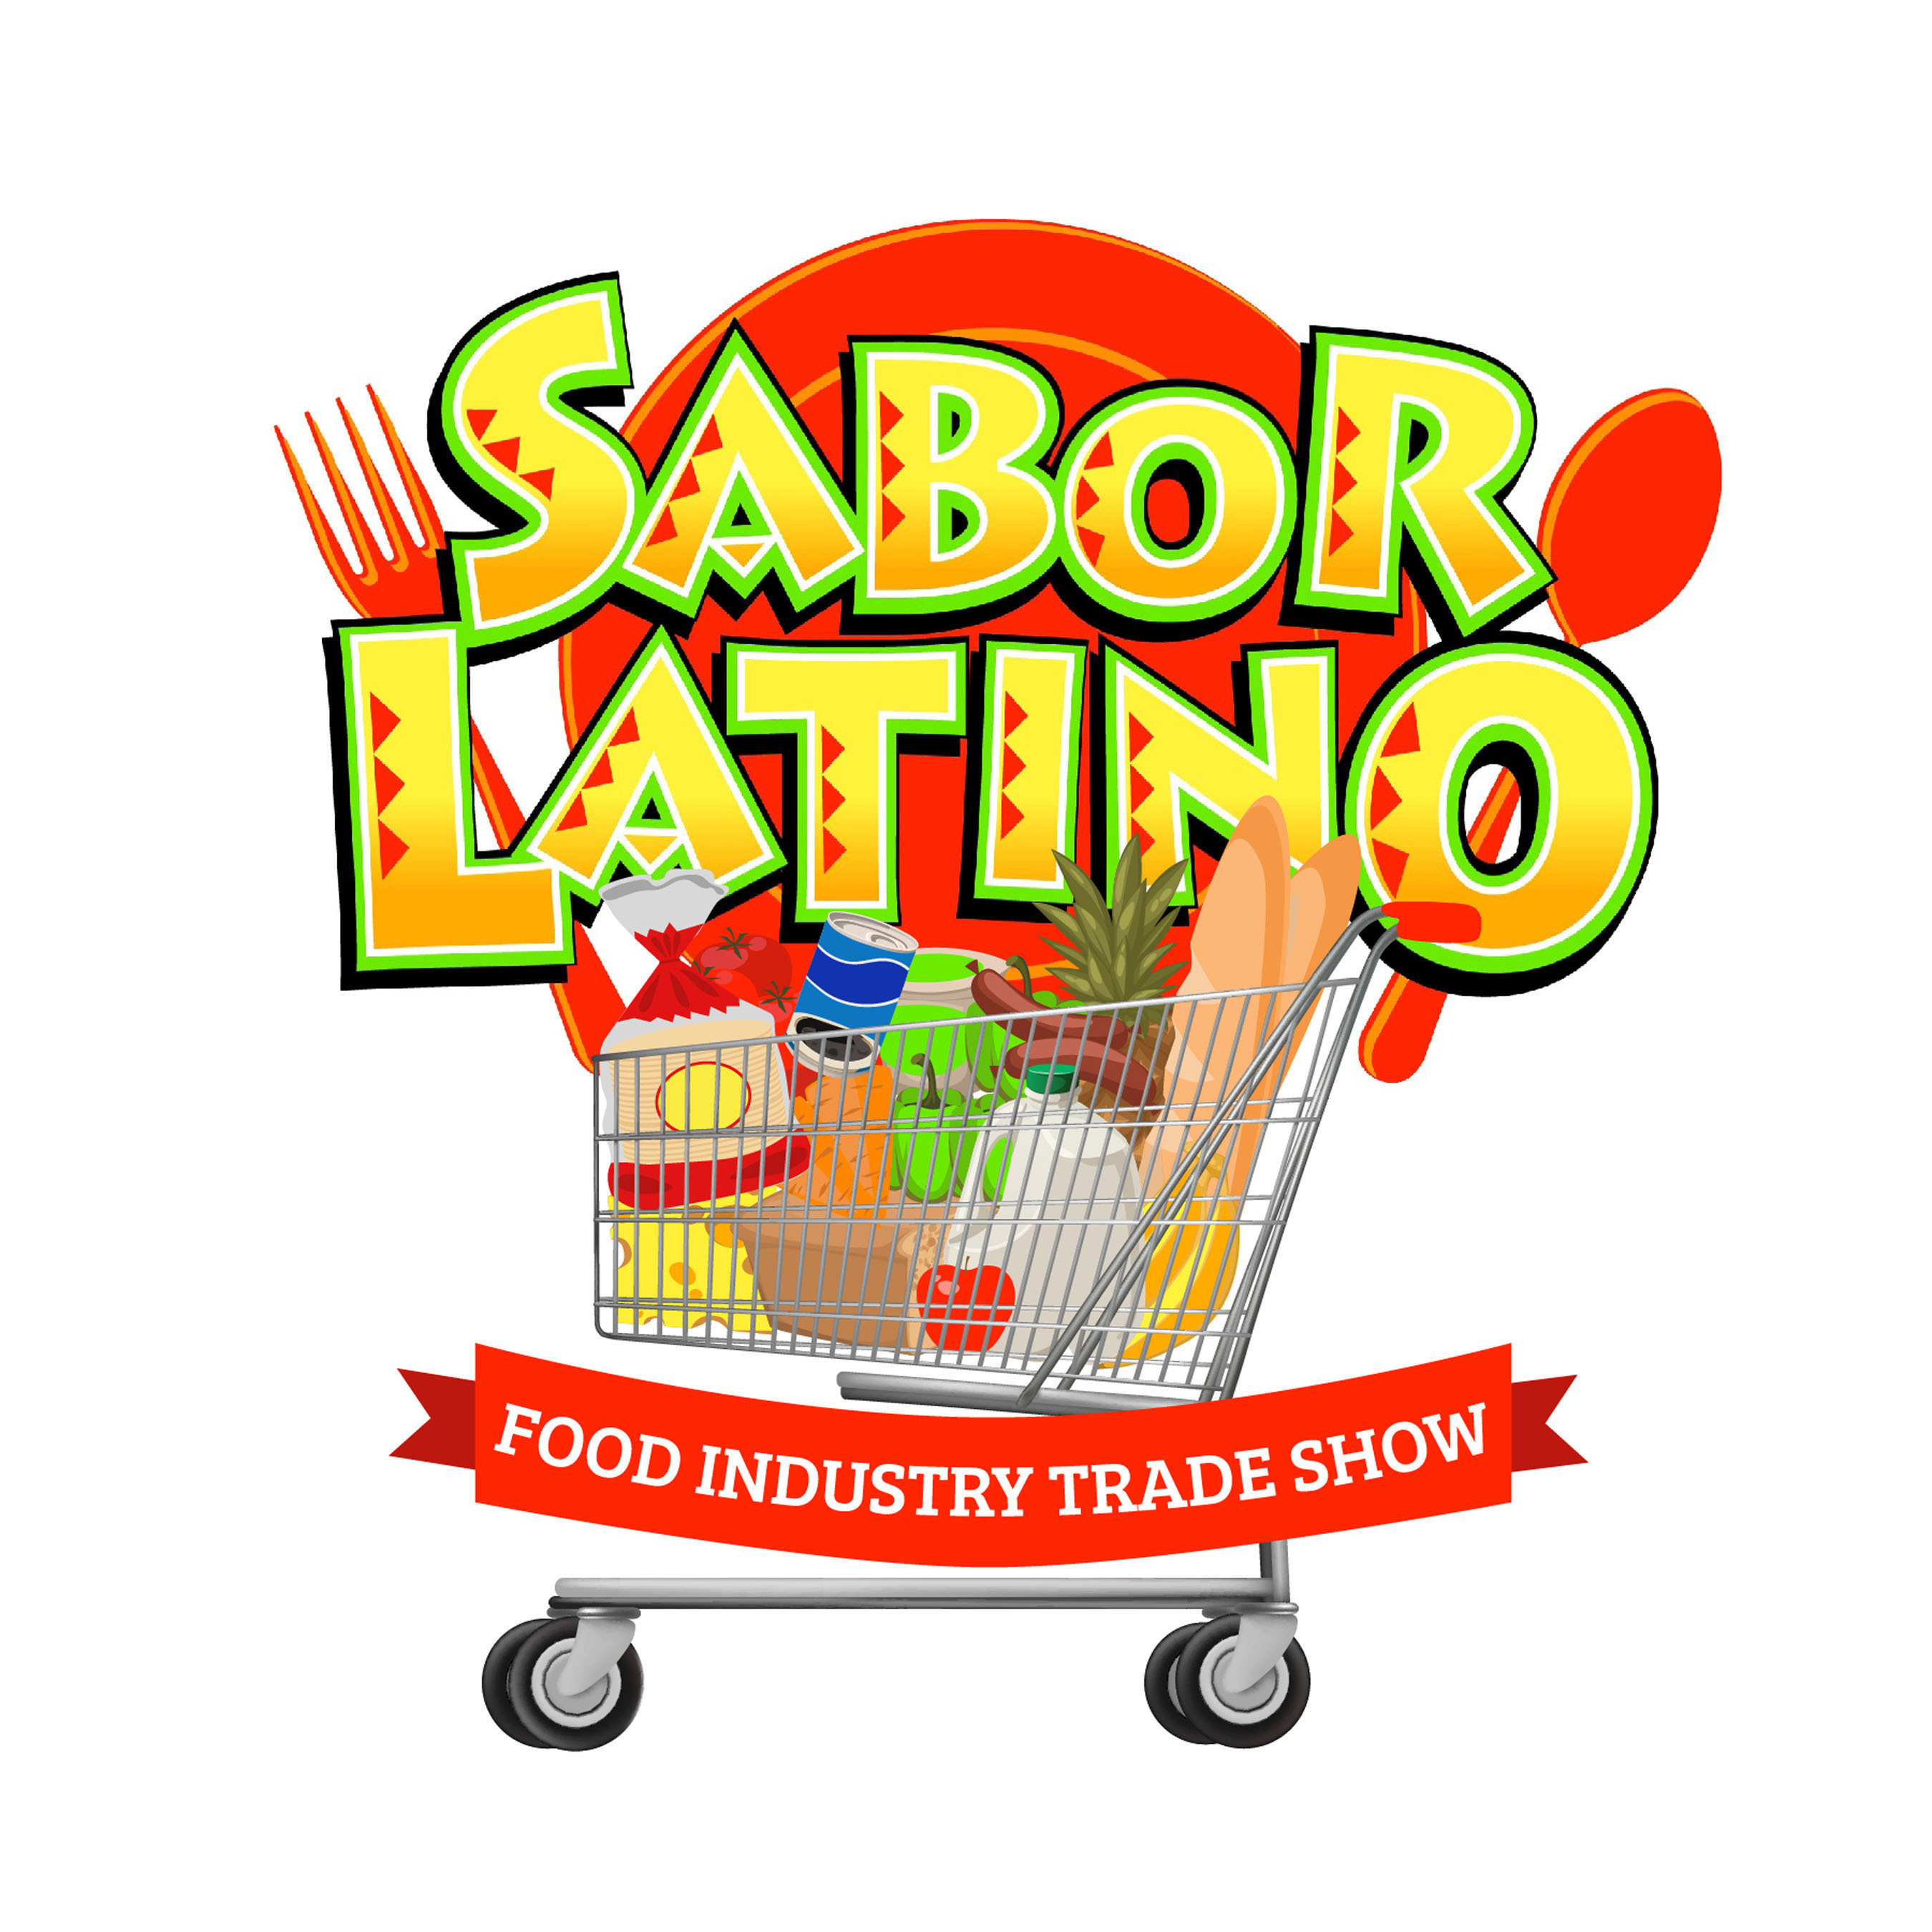 Sabor Latino Food Industry Trade Show. (PRNewsFoto/Sabor Latino) (PRNewsFoto/SABOR LATINO)